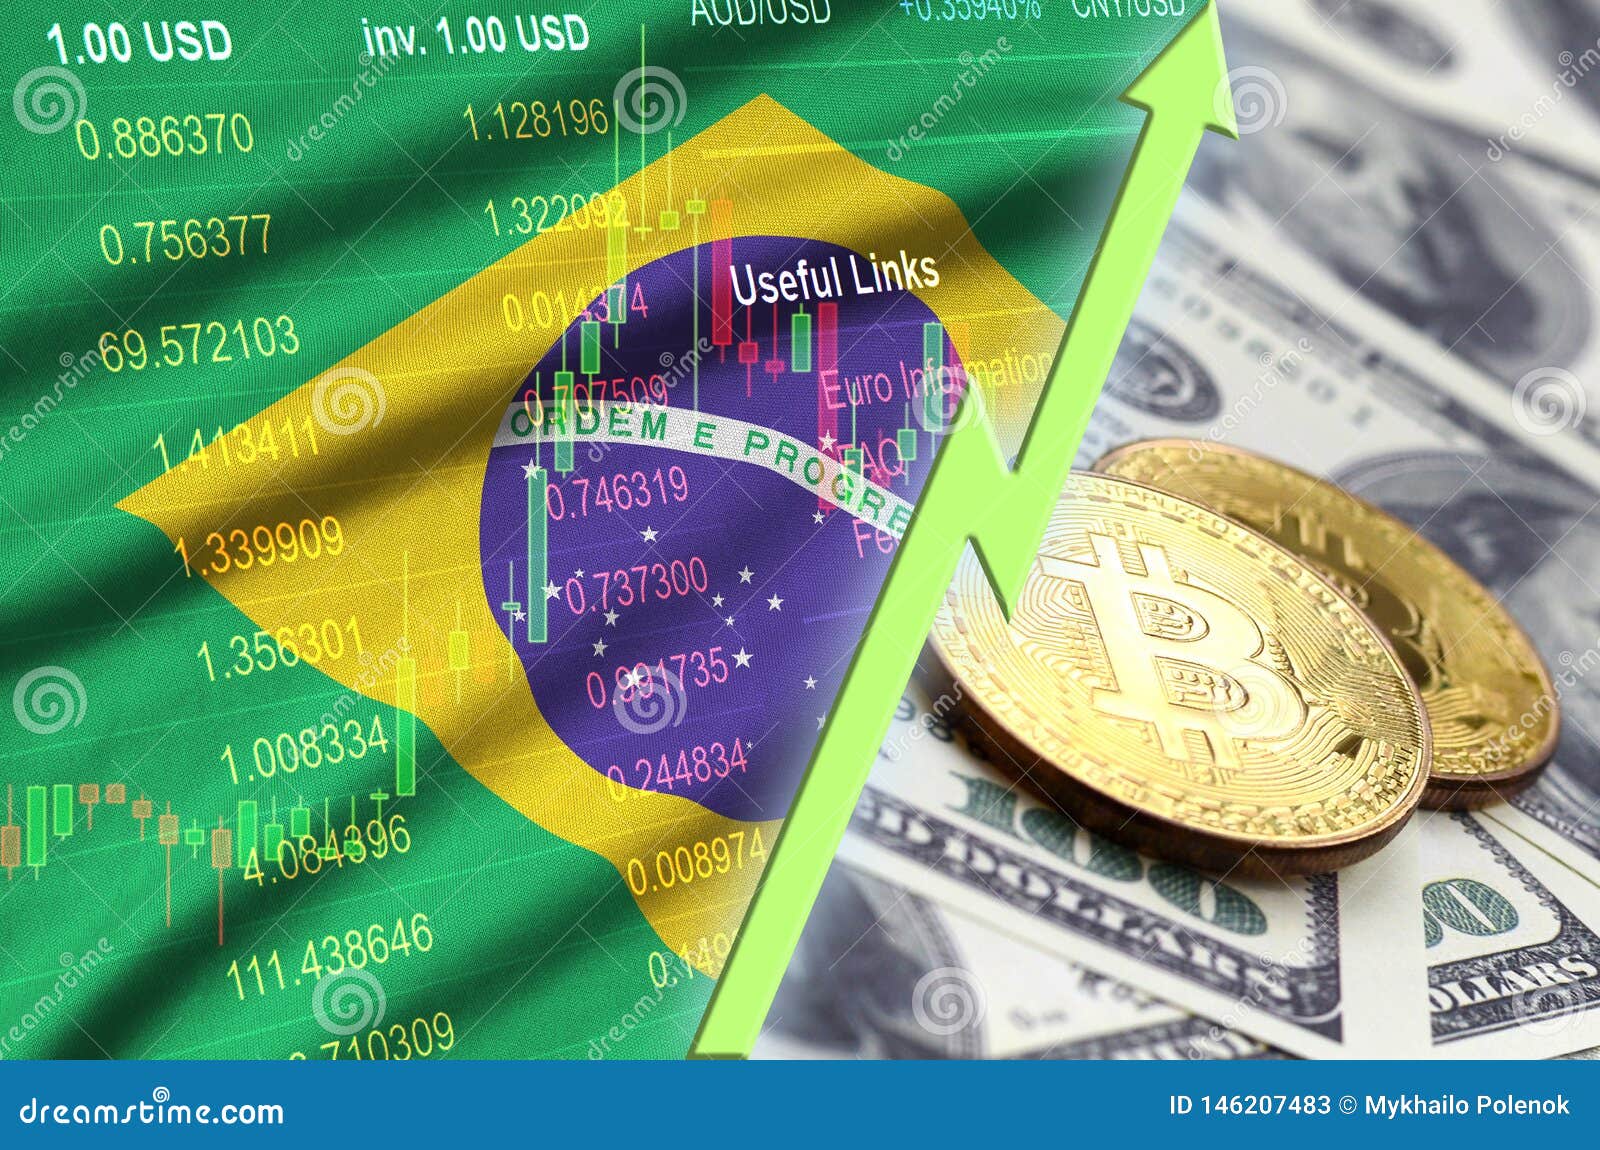 bitcoin exchange in brazil